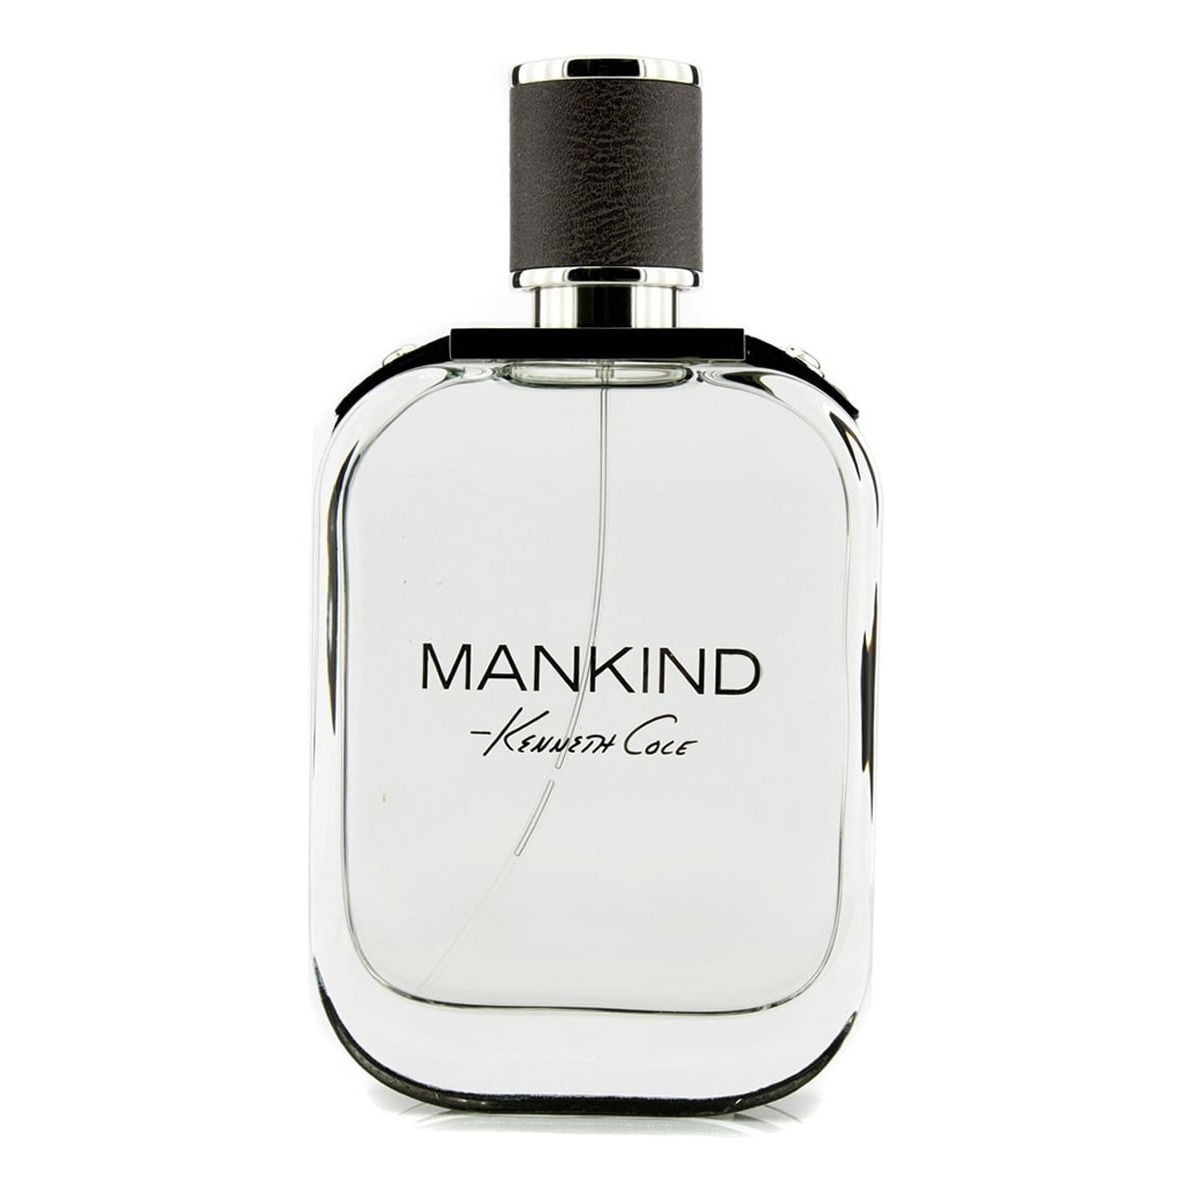 Mankind перевод. Kenneth Cole мужской Парфюм. Туалетная вода Mankind Hero. Mankind туалетная вода для мужчин. Mankind Kenneth Cole.